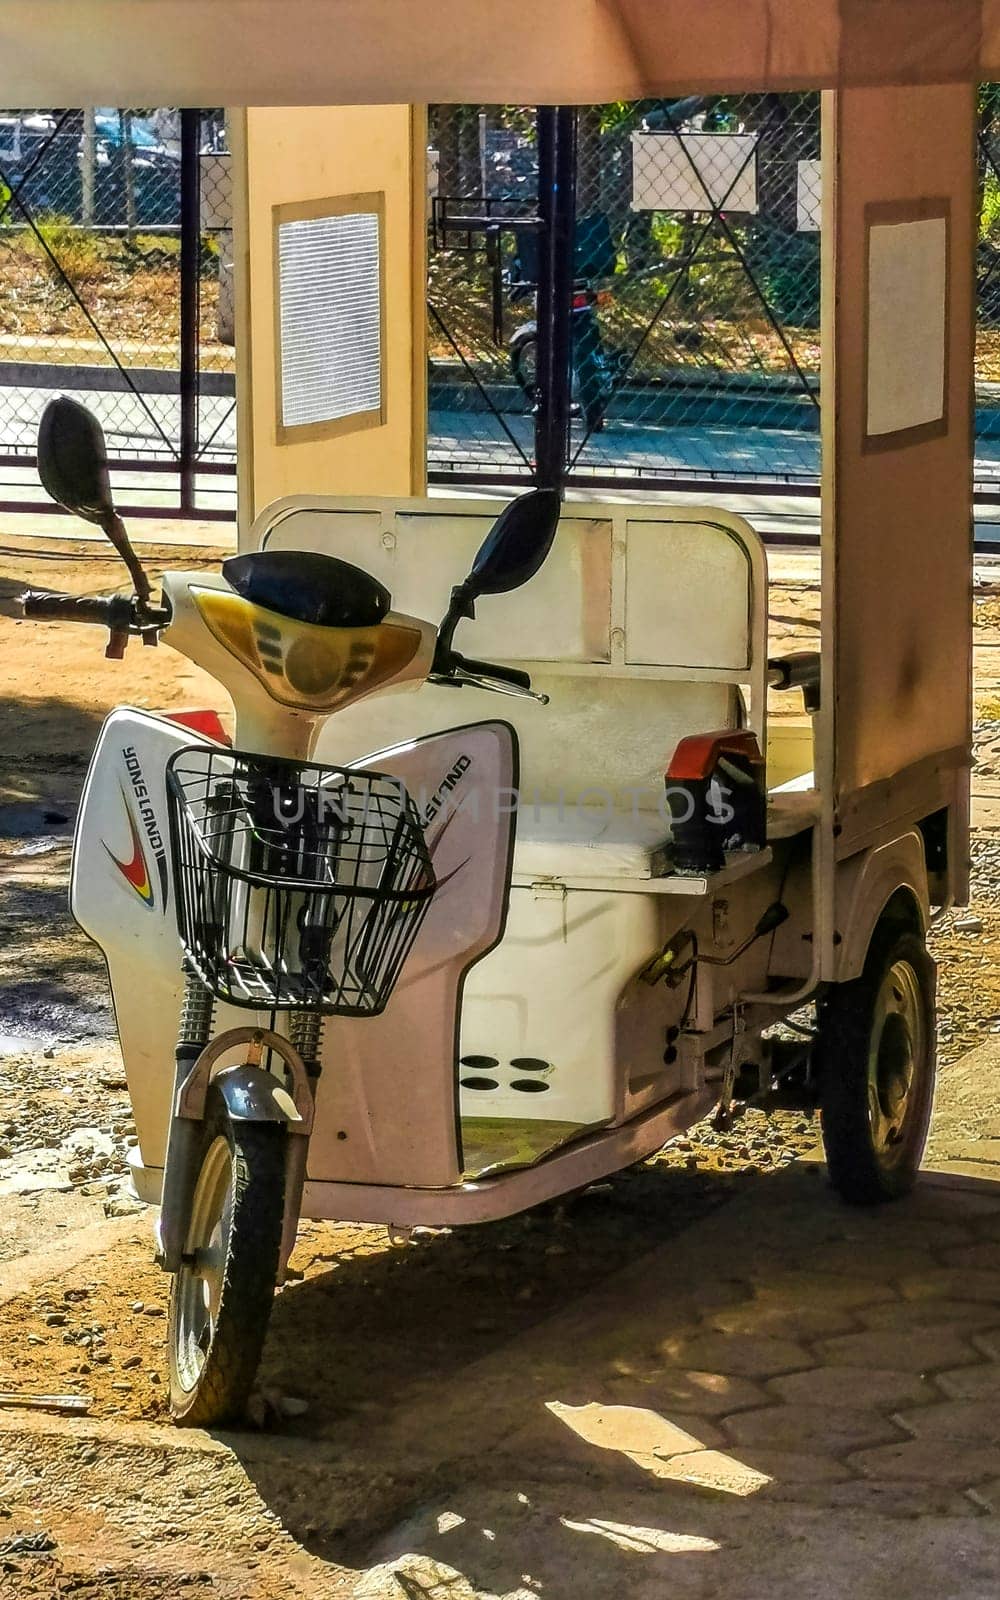 White tuk tuk tricycle TukTuks rickshaw in Mexico. by Arkadij